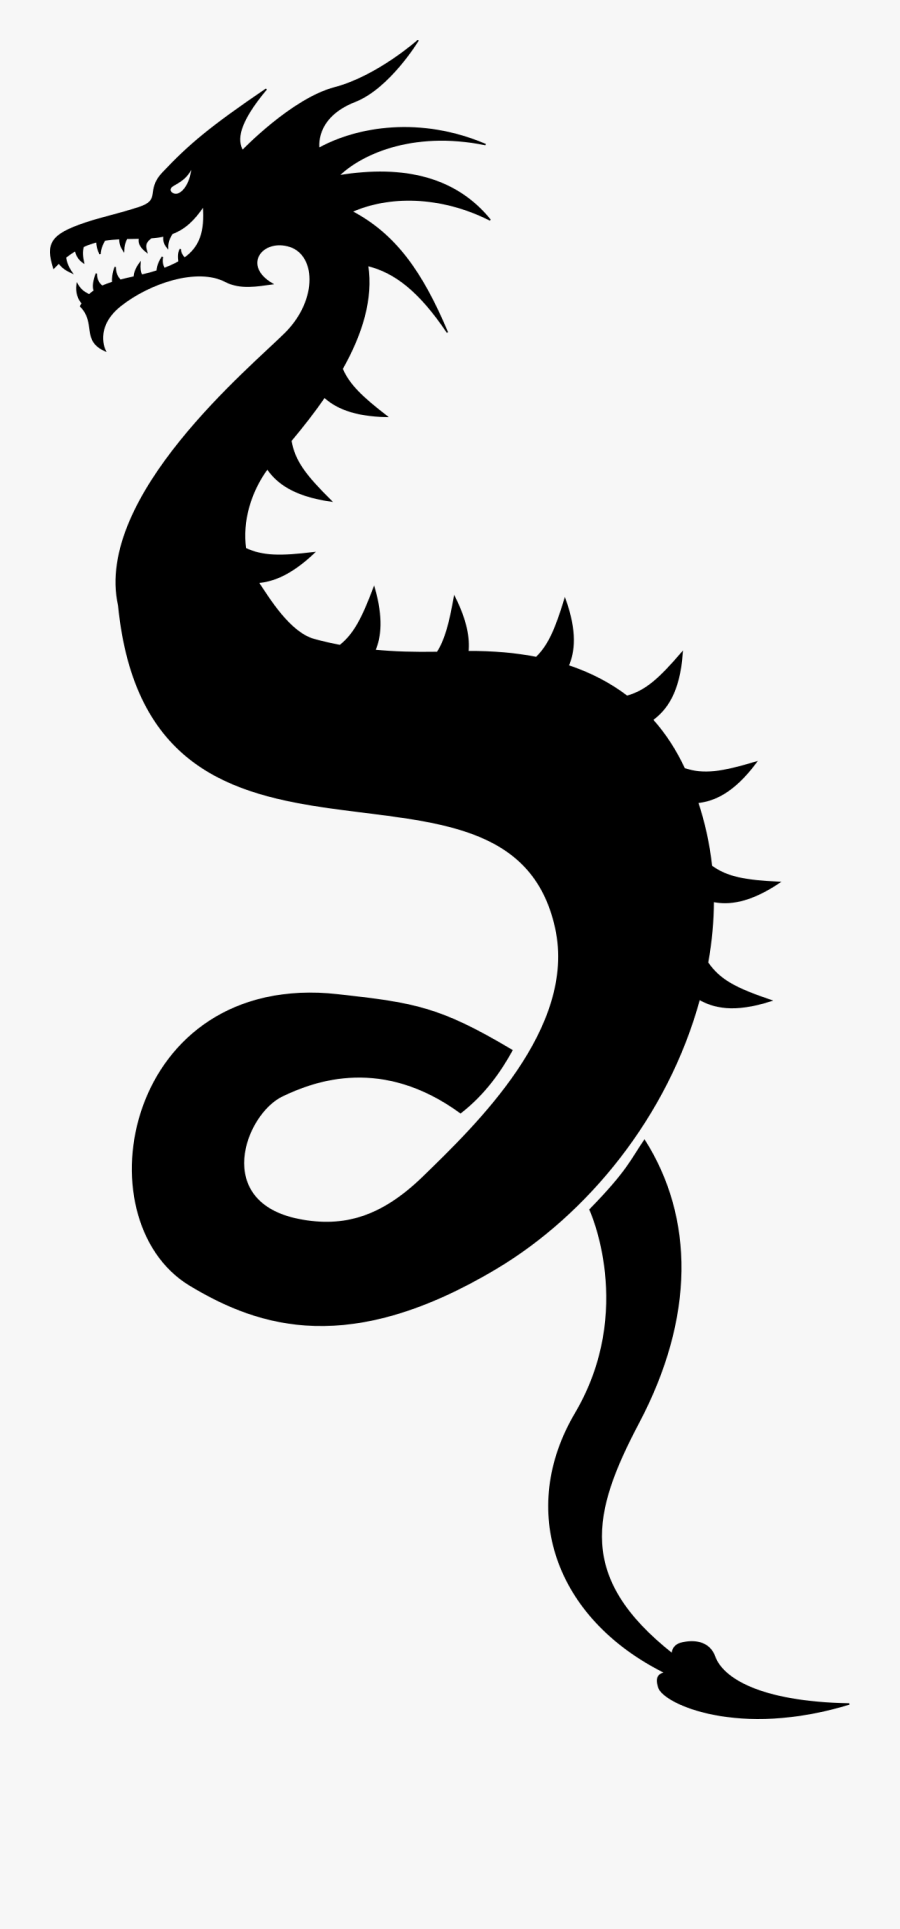 Simple Dragon Png - Dragon Silhouette Png, Transparent Clipart